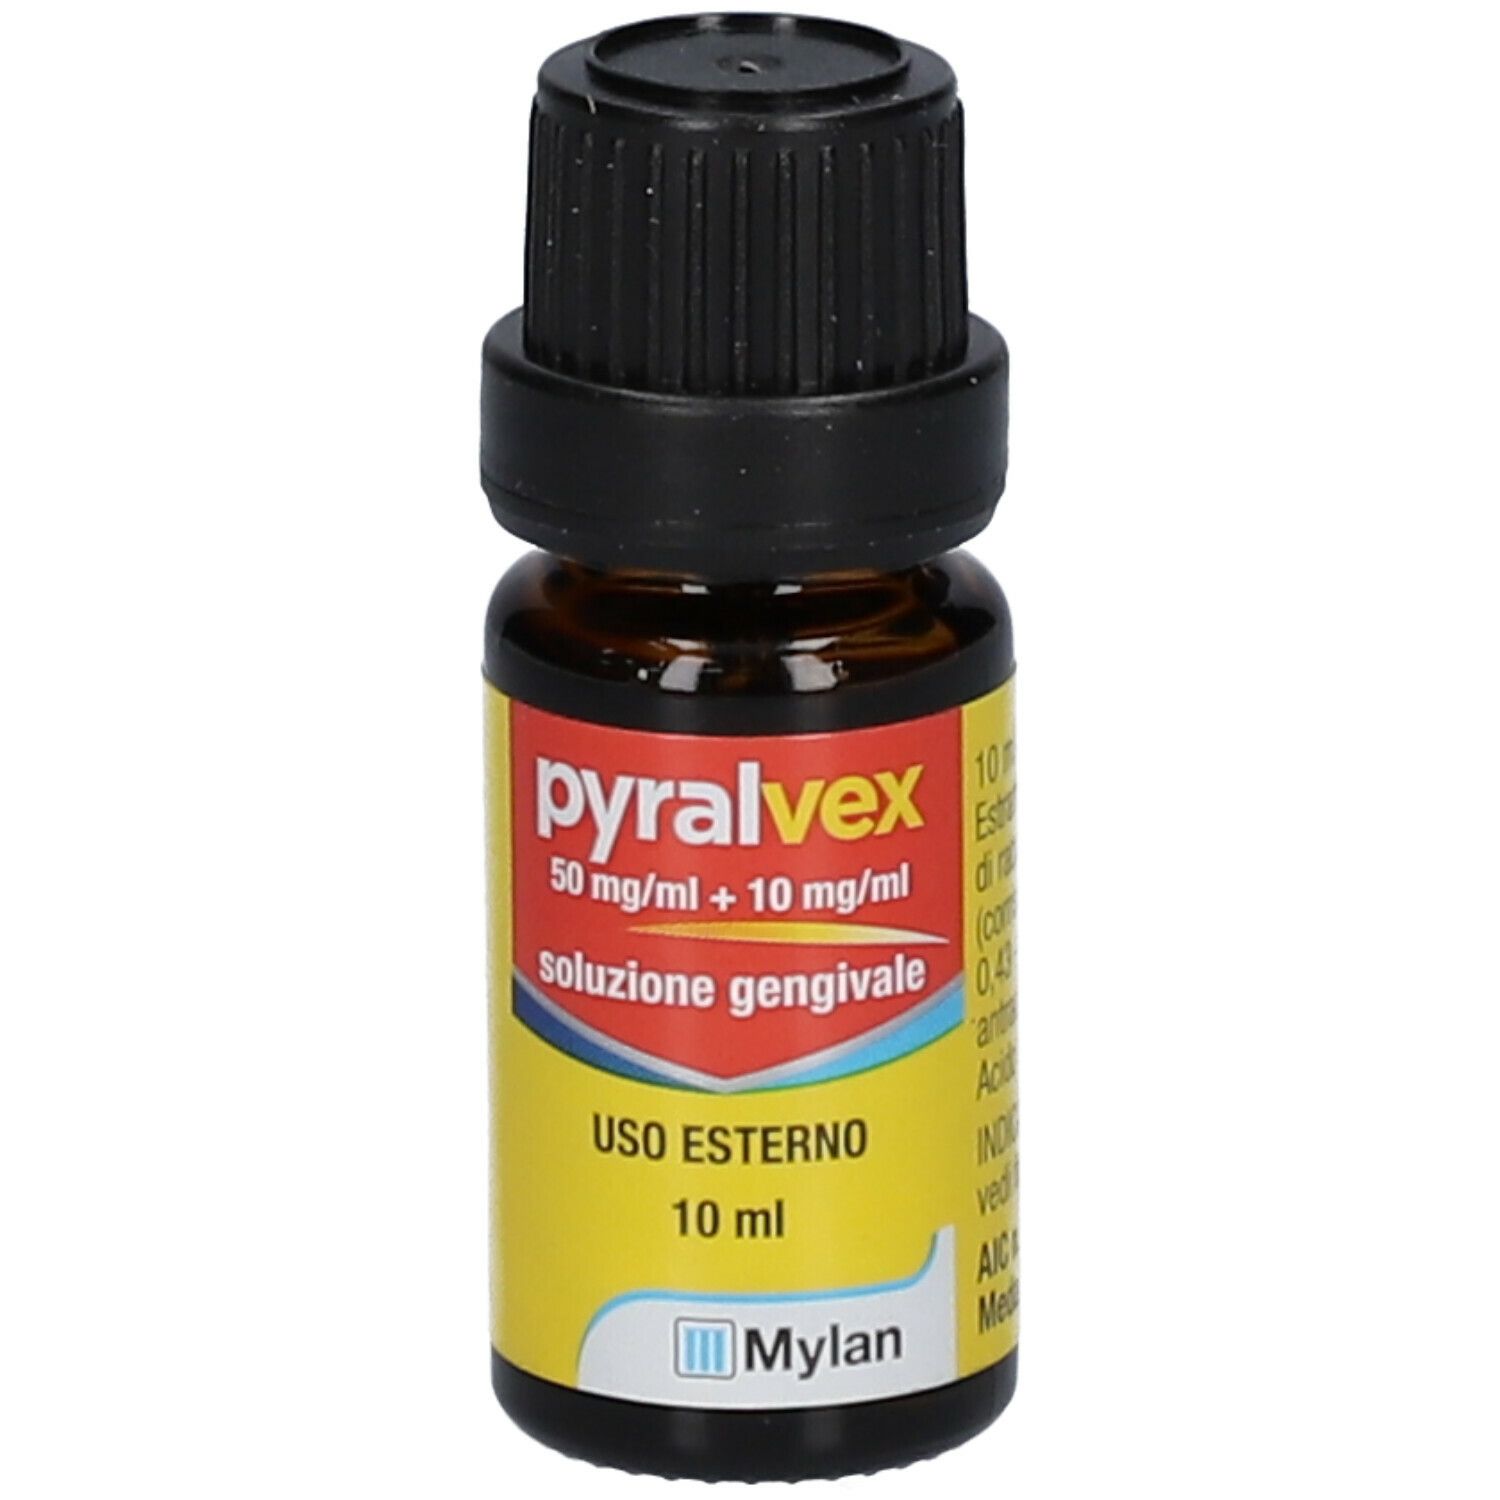 PYRALVEX 50 mg/ml + 10 mg/ml Soluzione gengivale